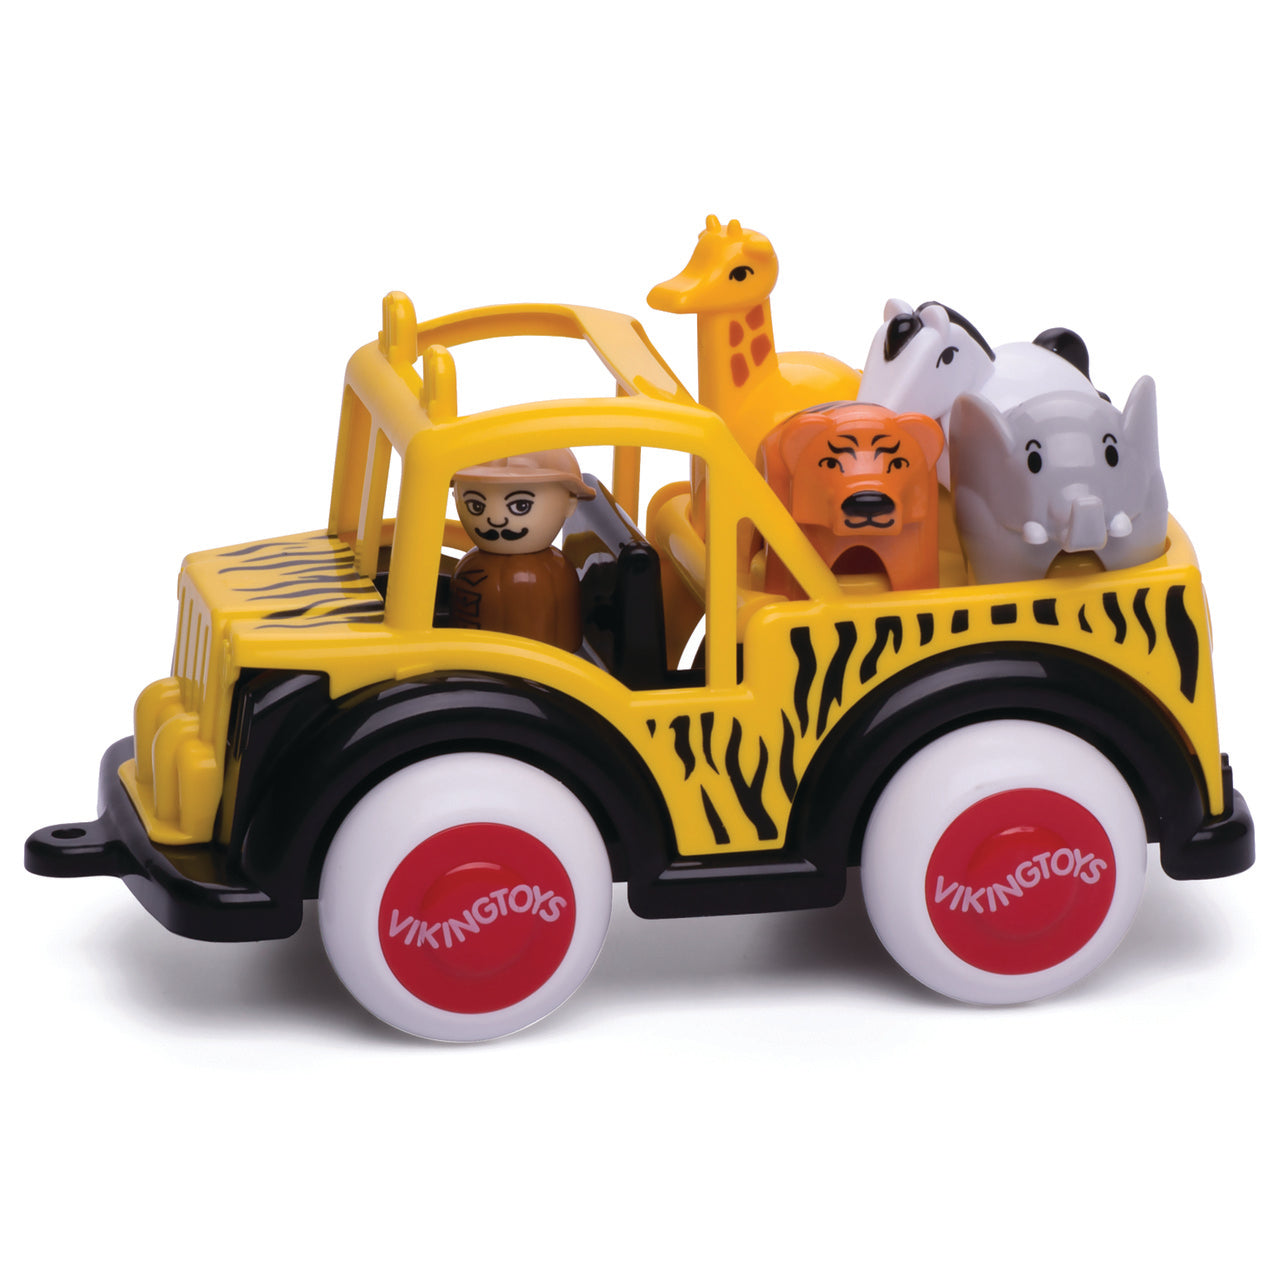 Viking Toys Safari Jeeppi, Hahmo sekä Eläimet 28cm